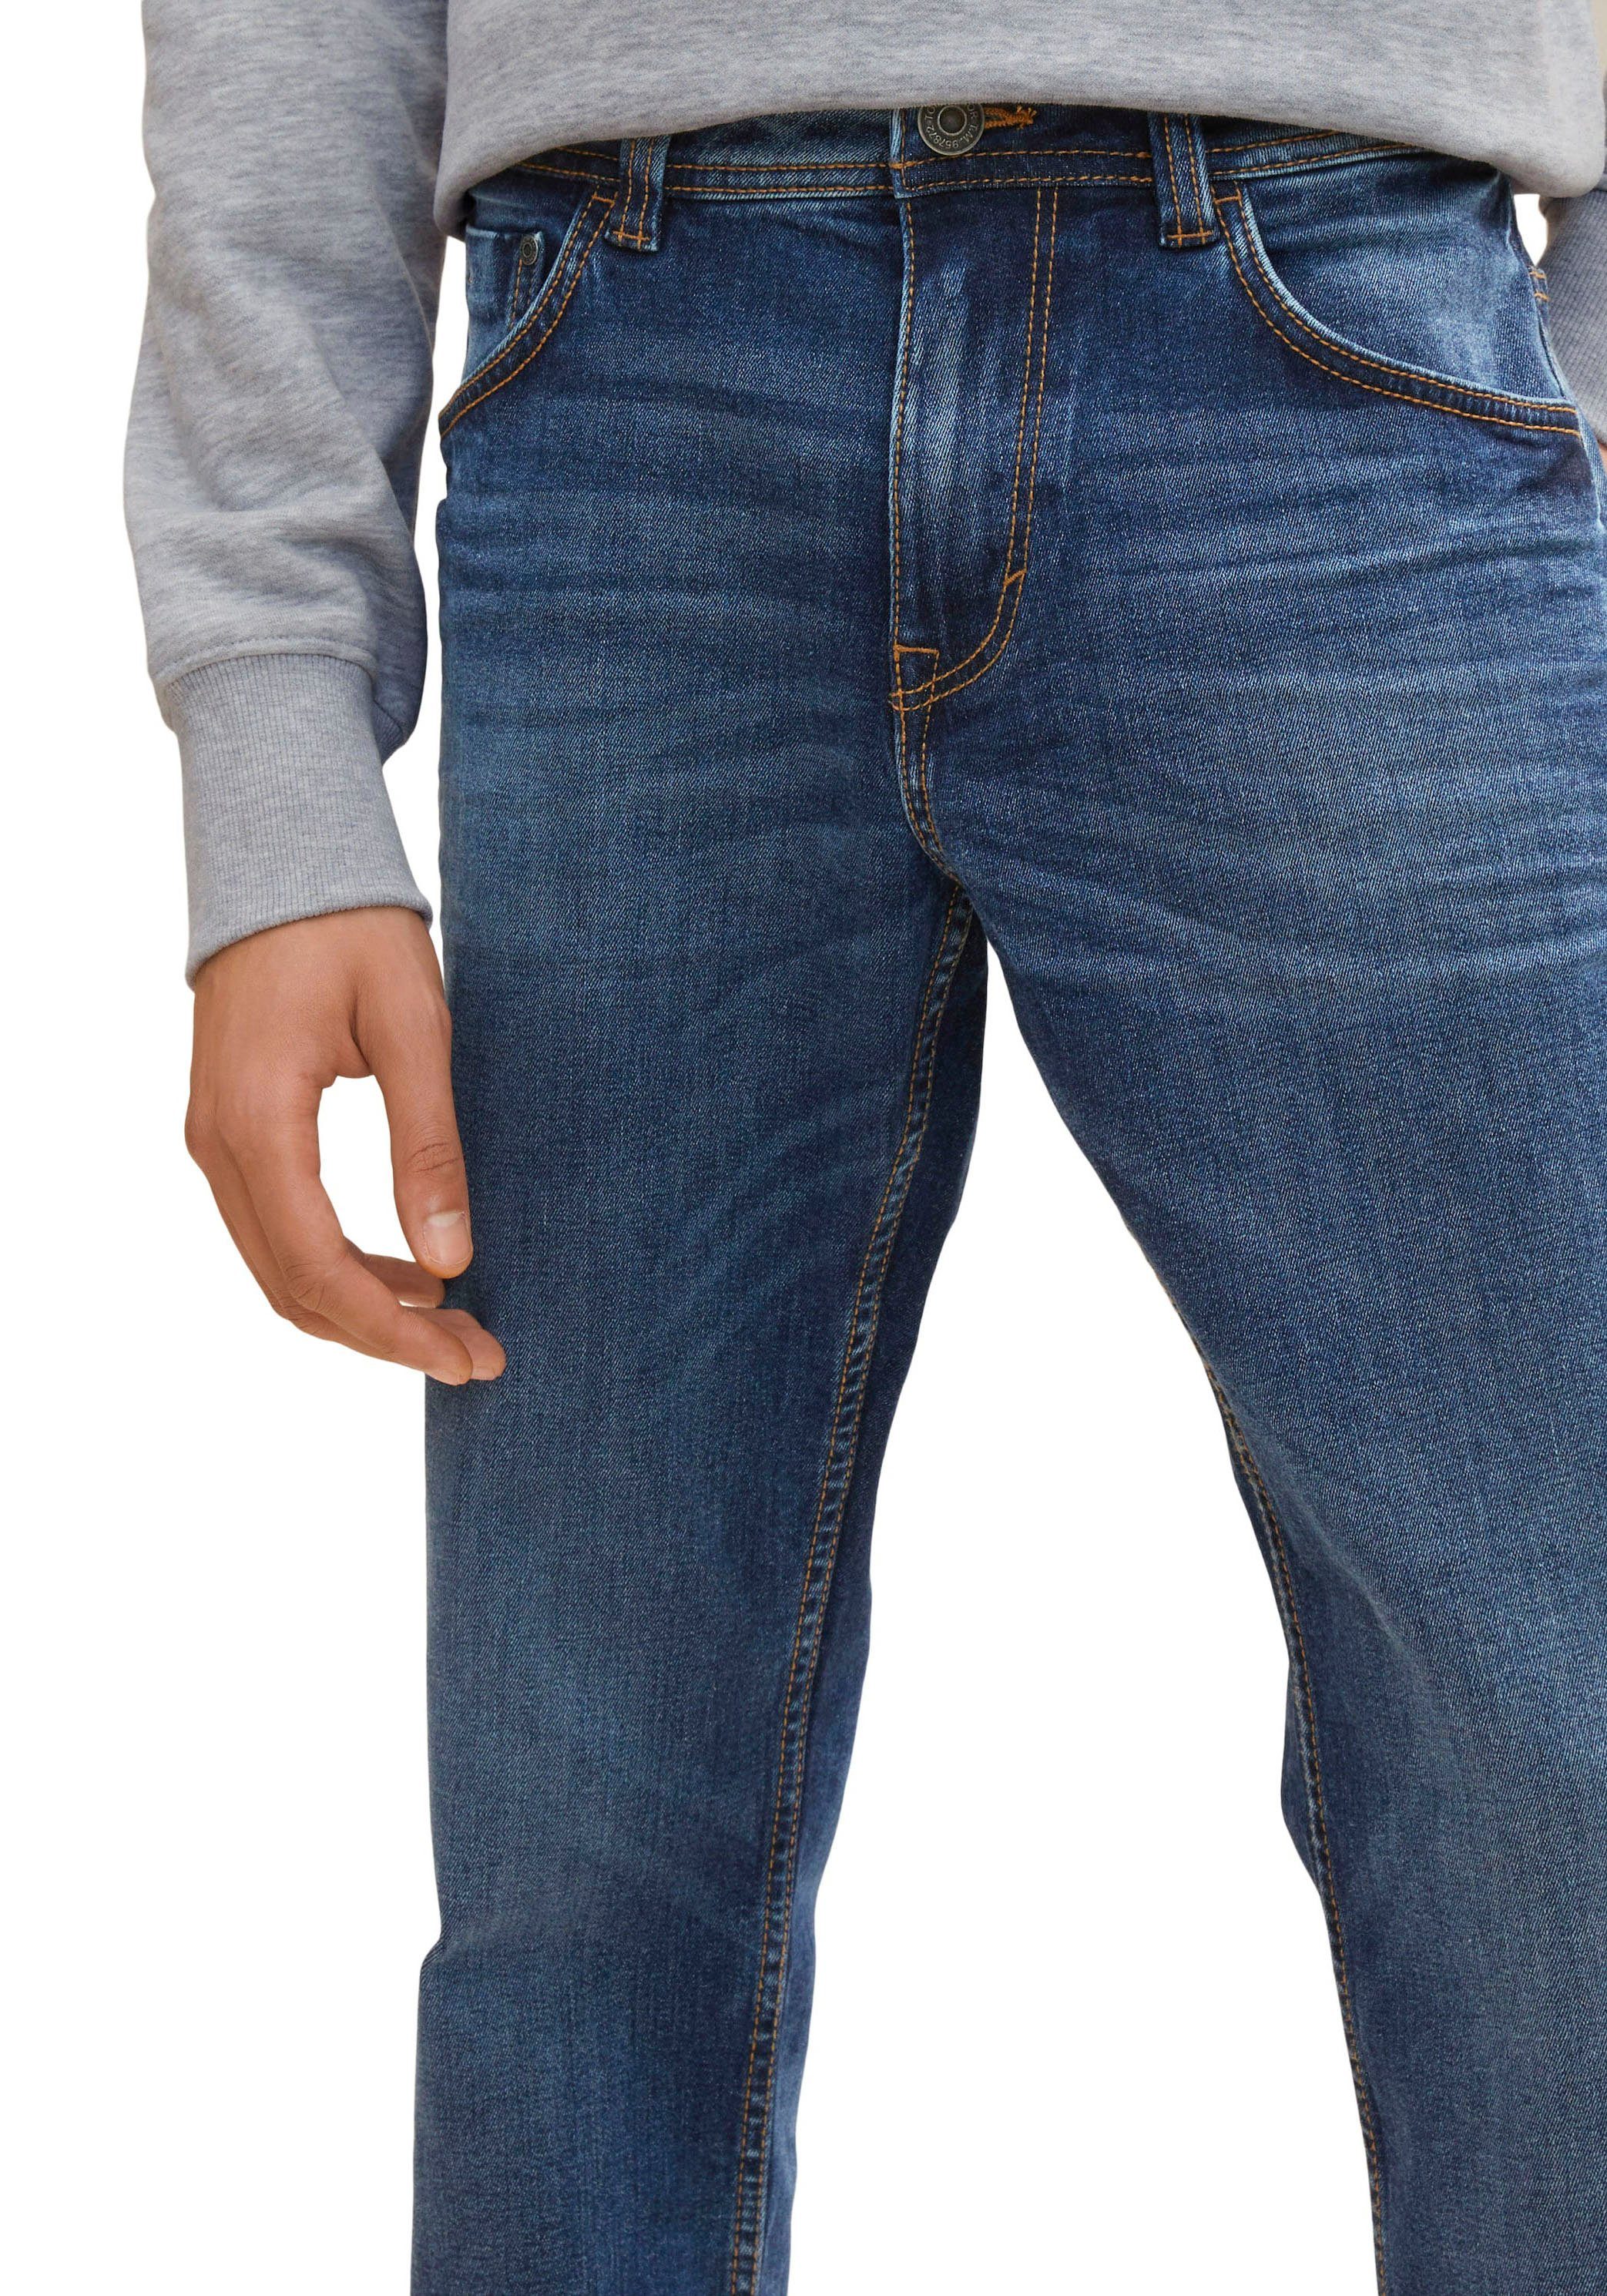 TOM TAILOR 5-Pocket-Jeans Logo-Print mid mit stone kleinem used MARVIN